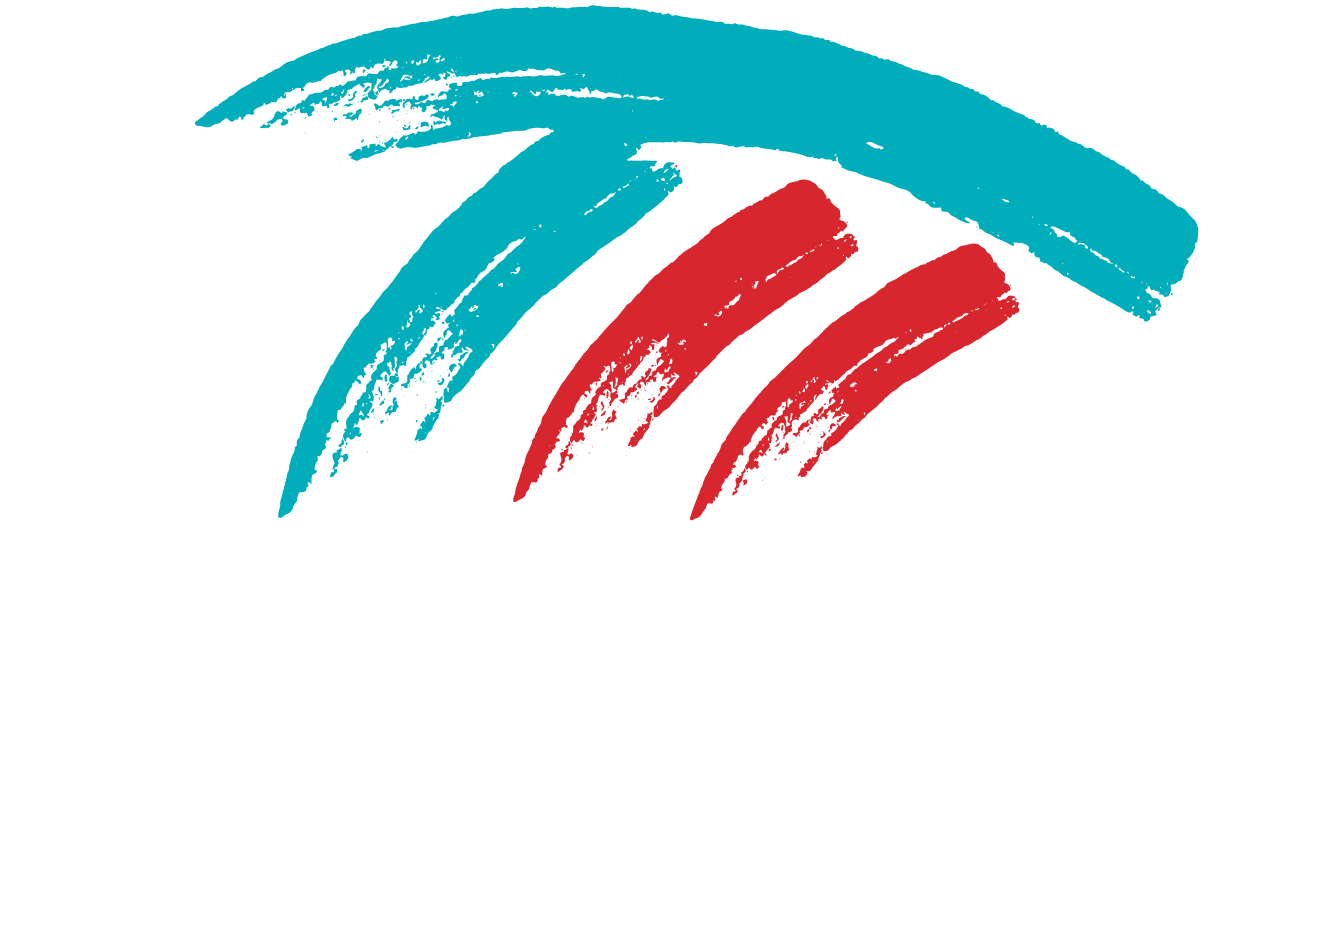 Tarni Resources